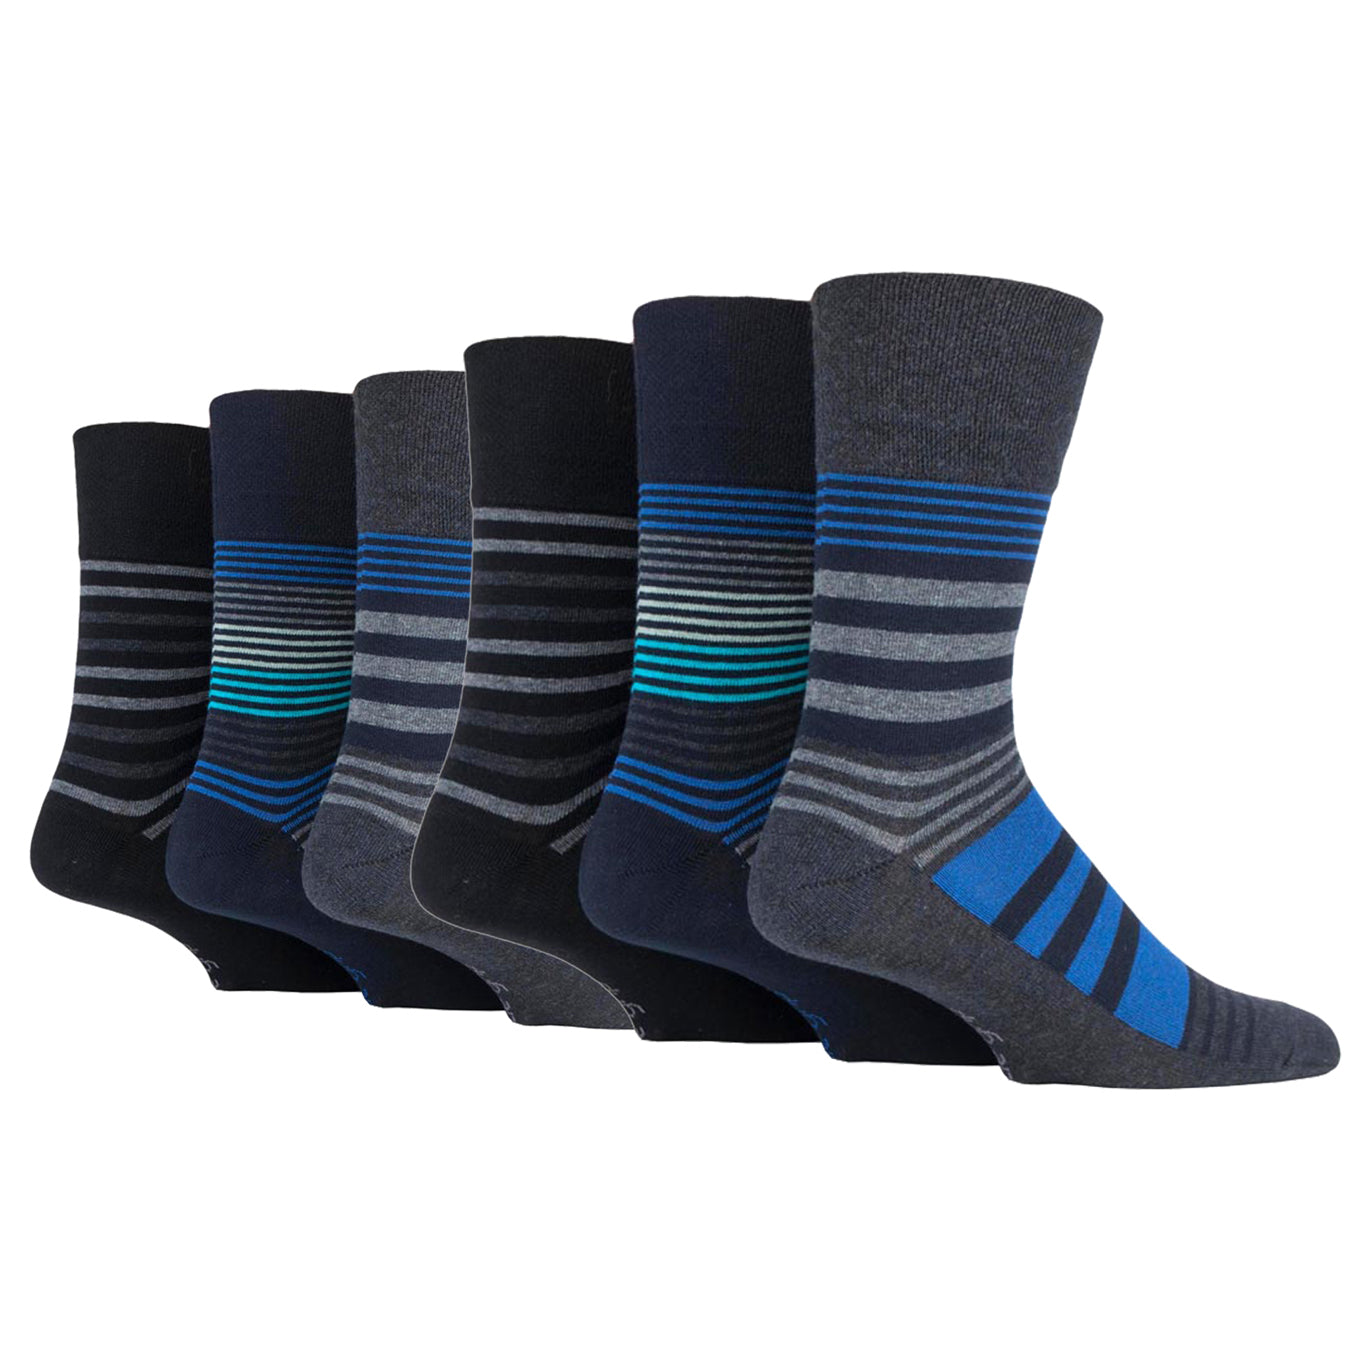 6 Pairs Men's Gentle Grip Cotton Socks - Linear Vision